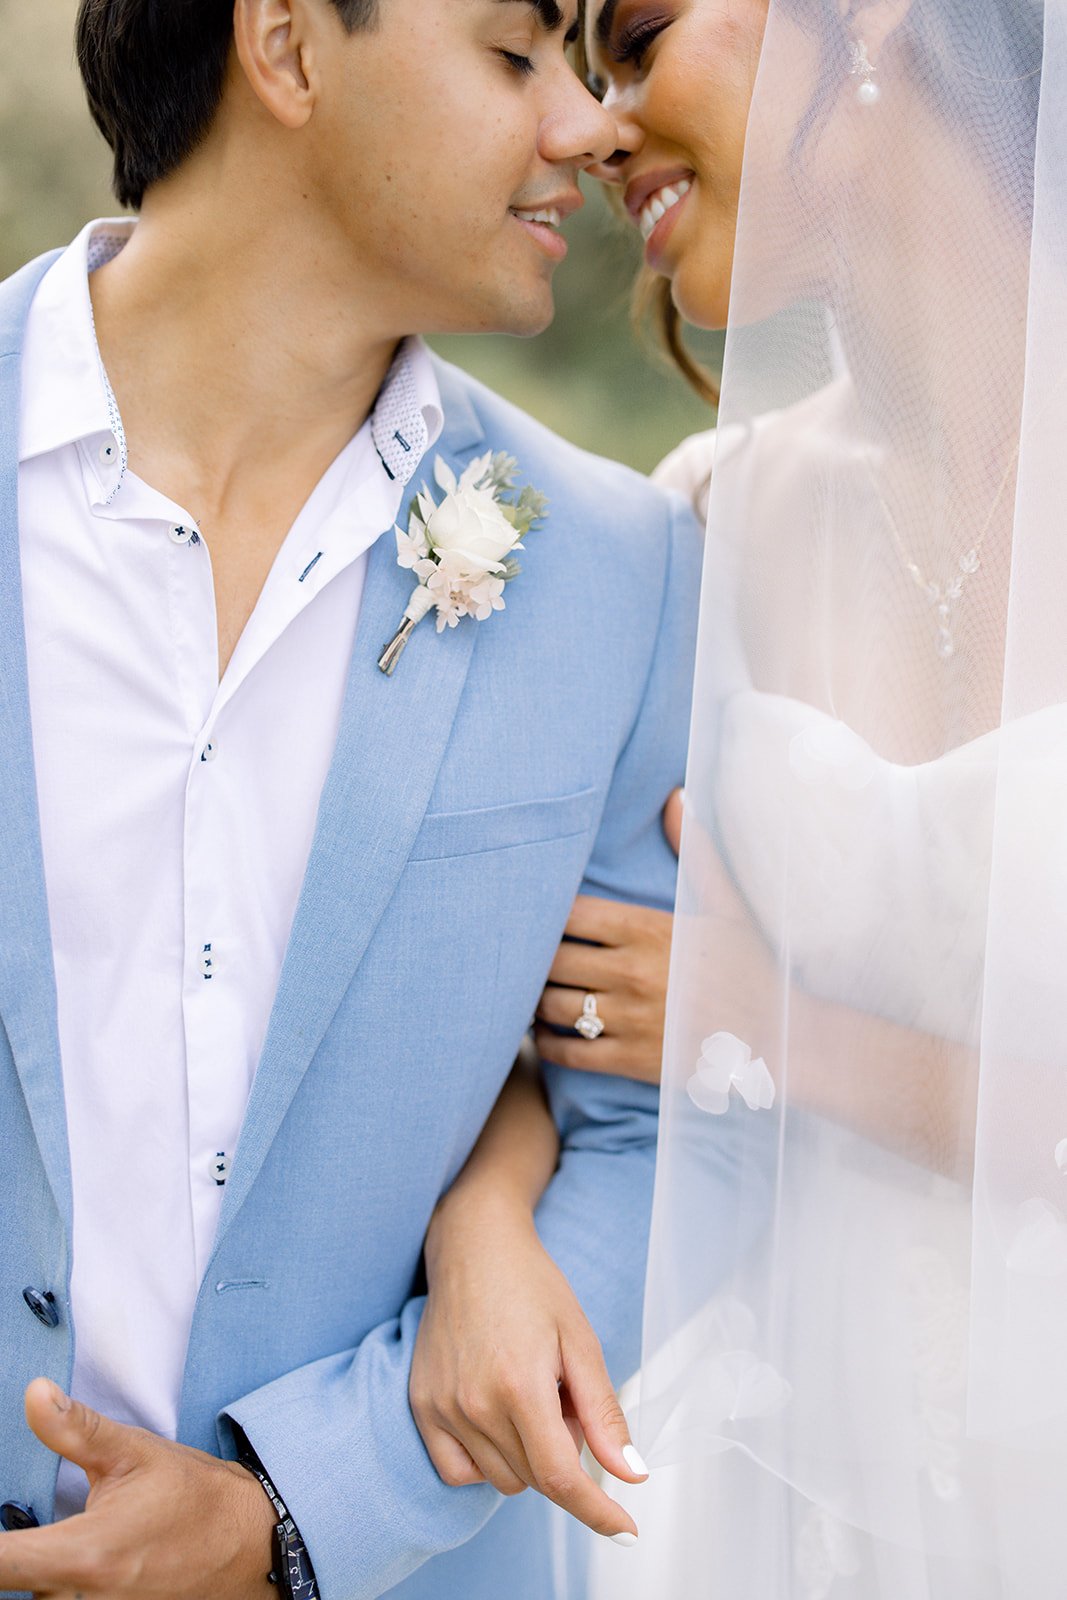 Bride and Groom close together under a bridal veil